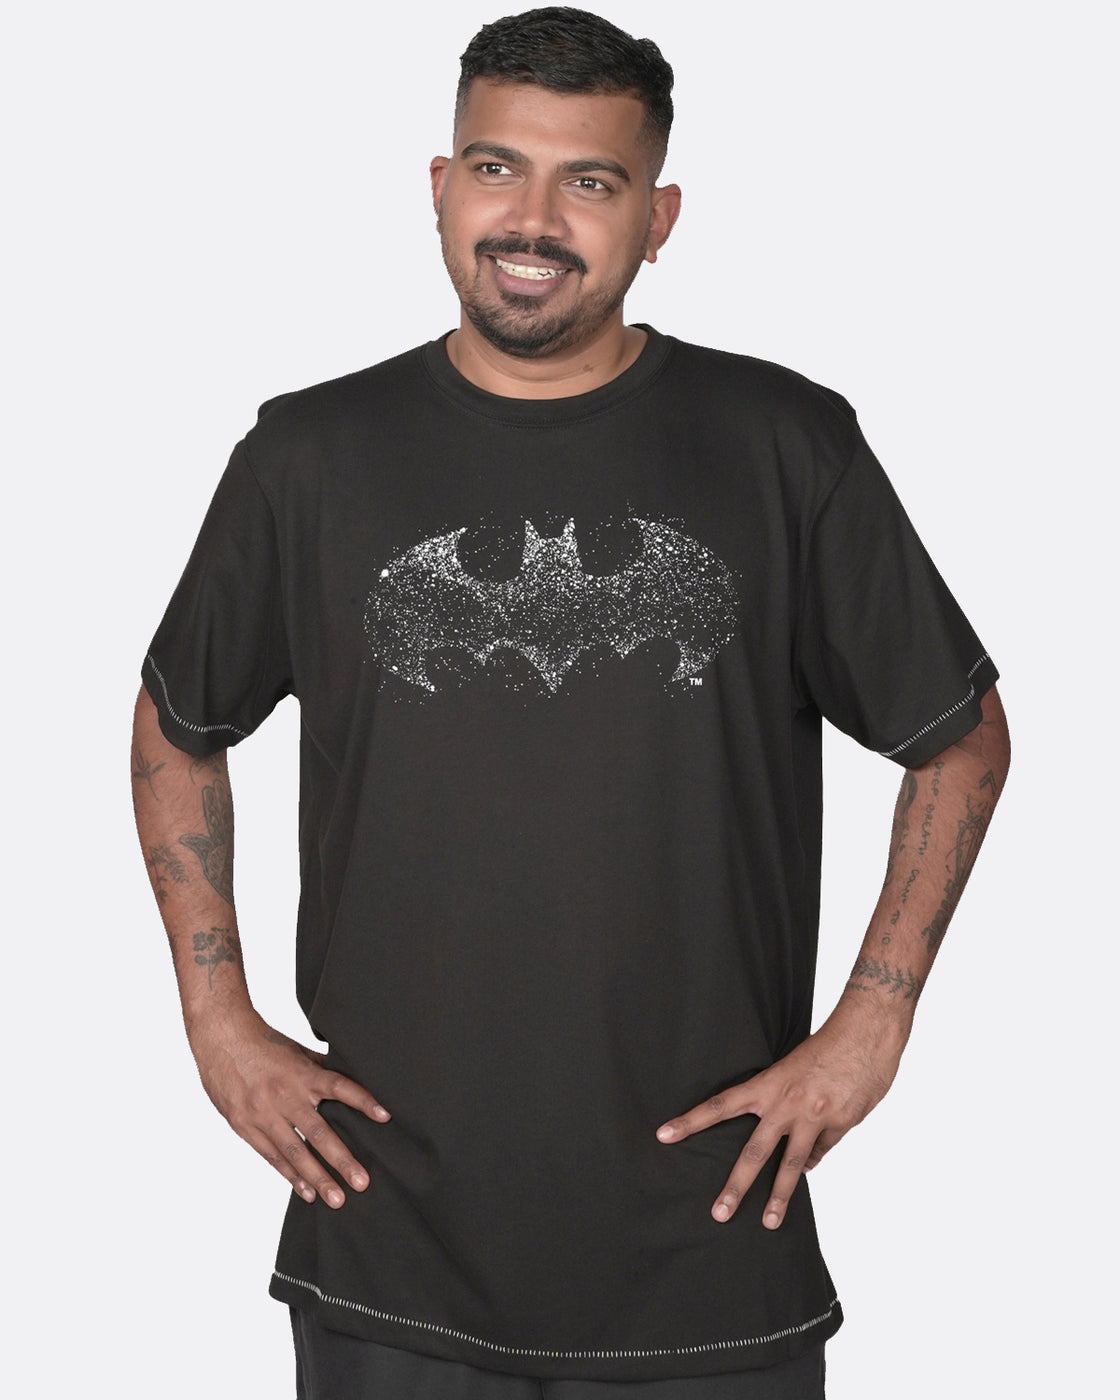 Batman Graphic Print T-Shirt by D555